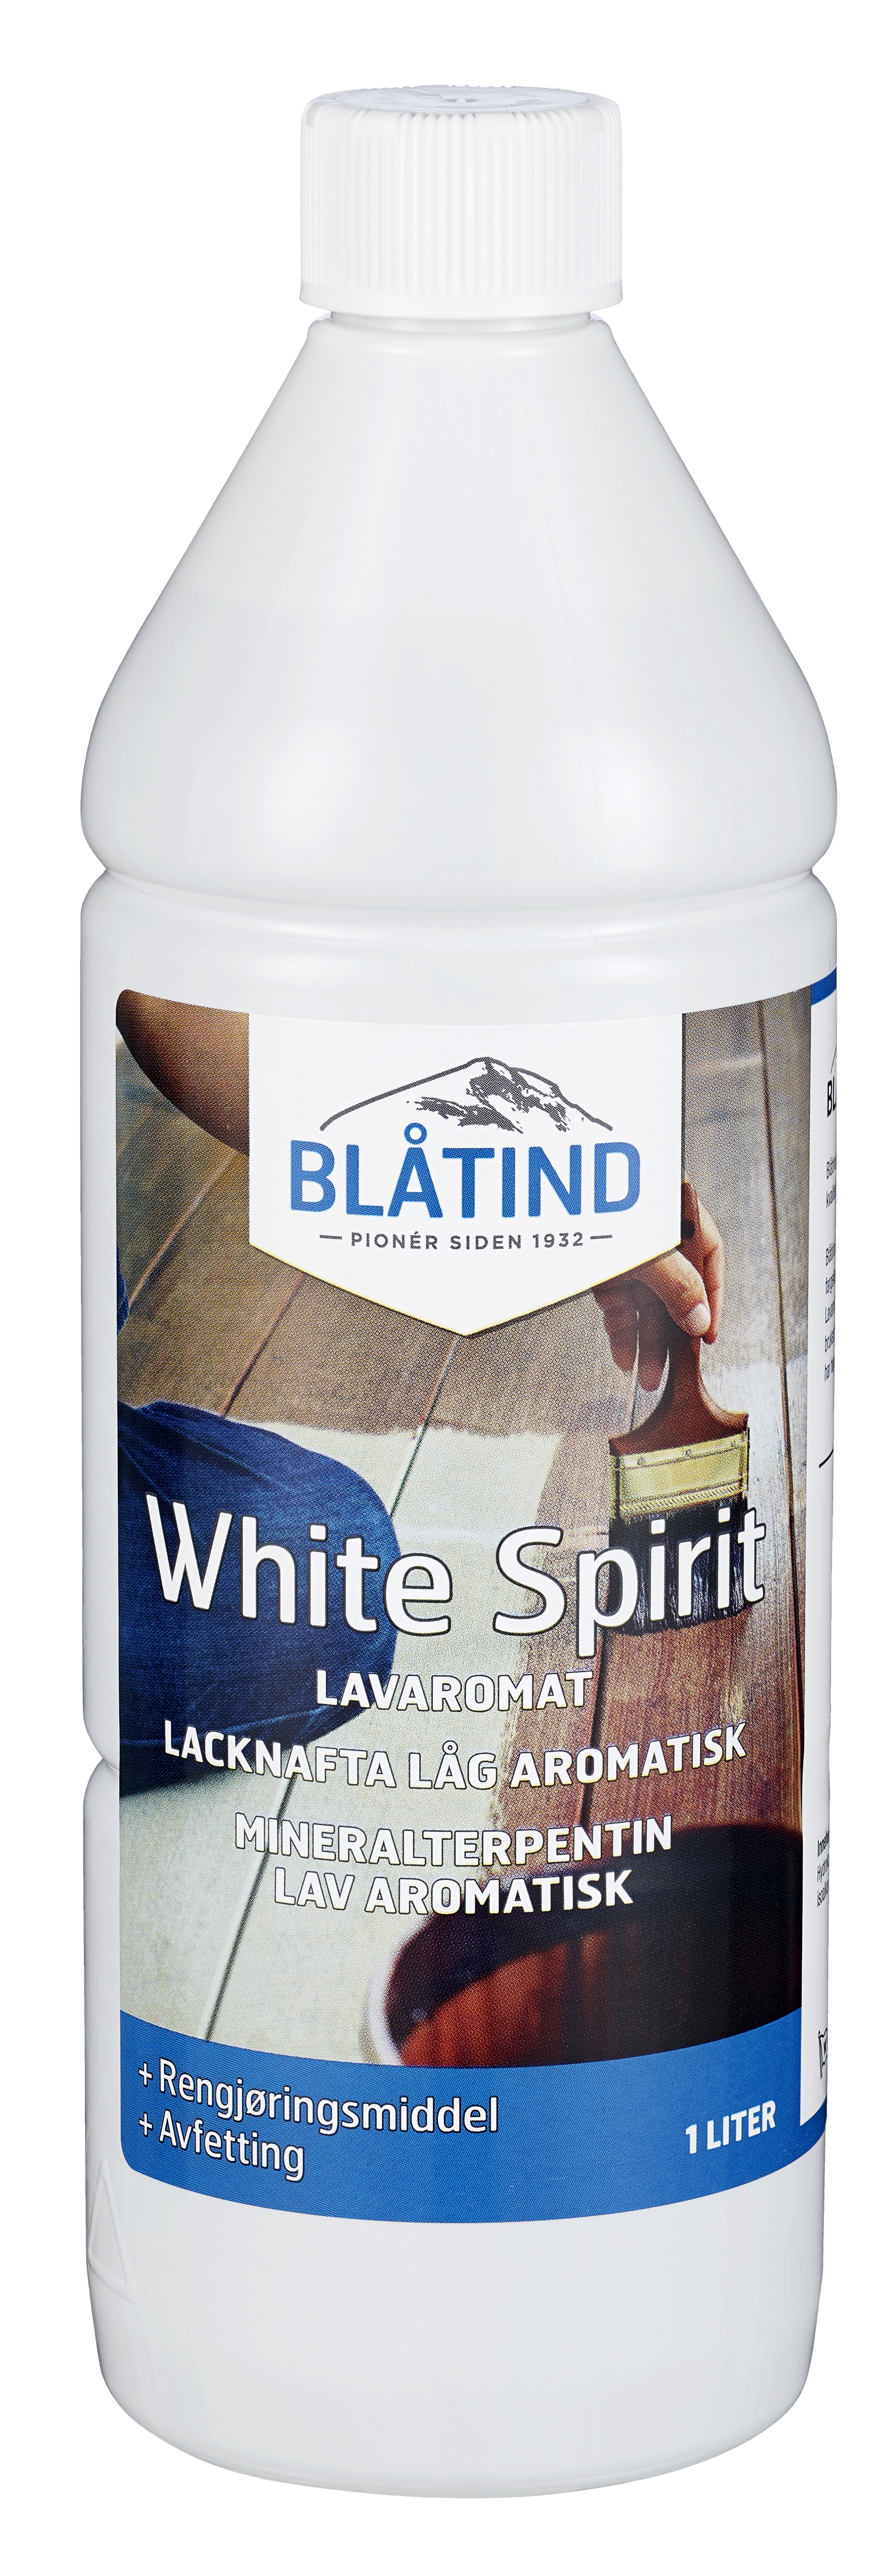 Blåtind white spirit lavaromat